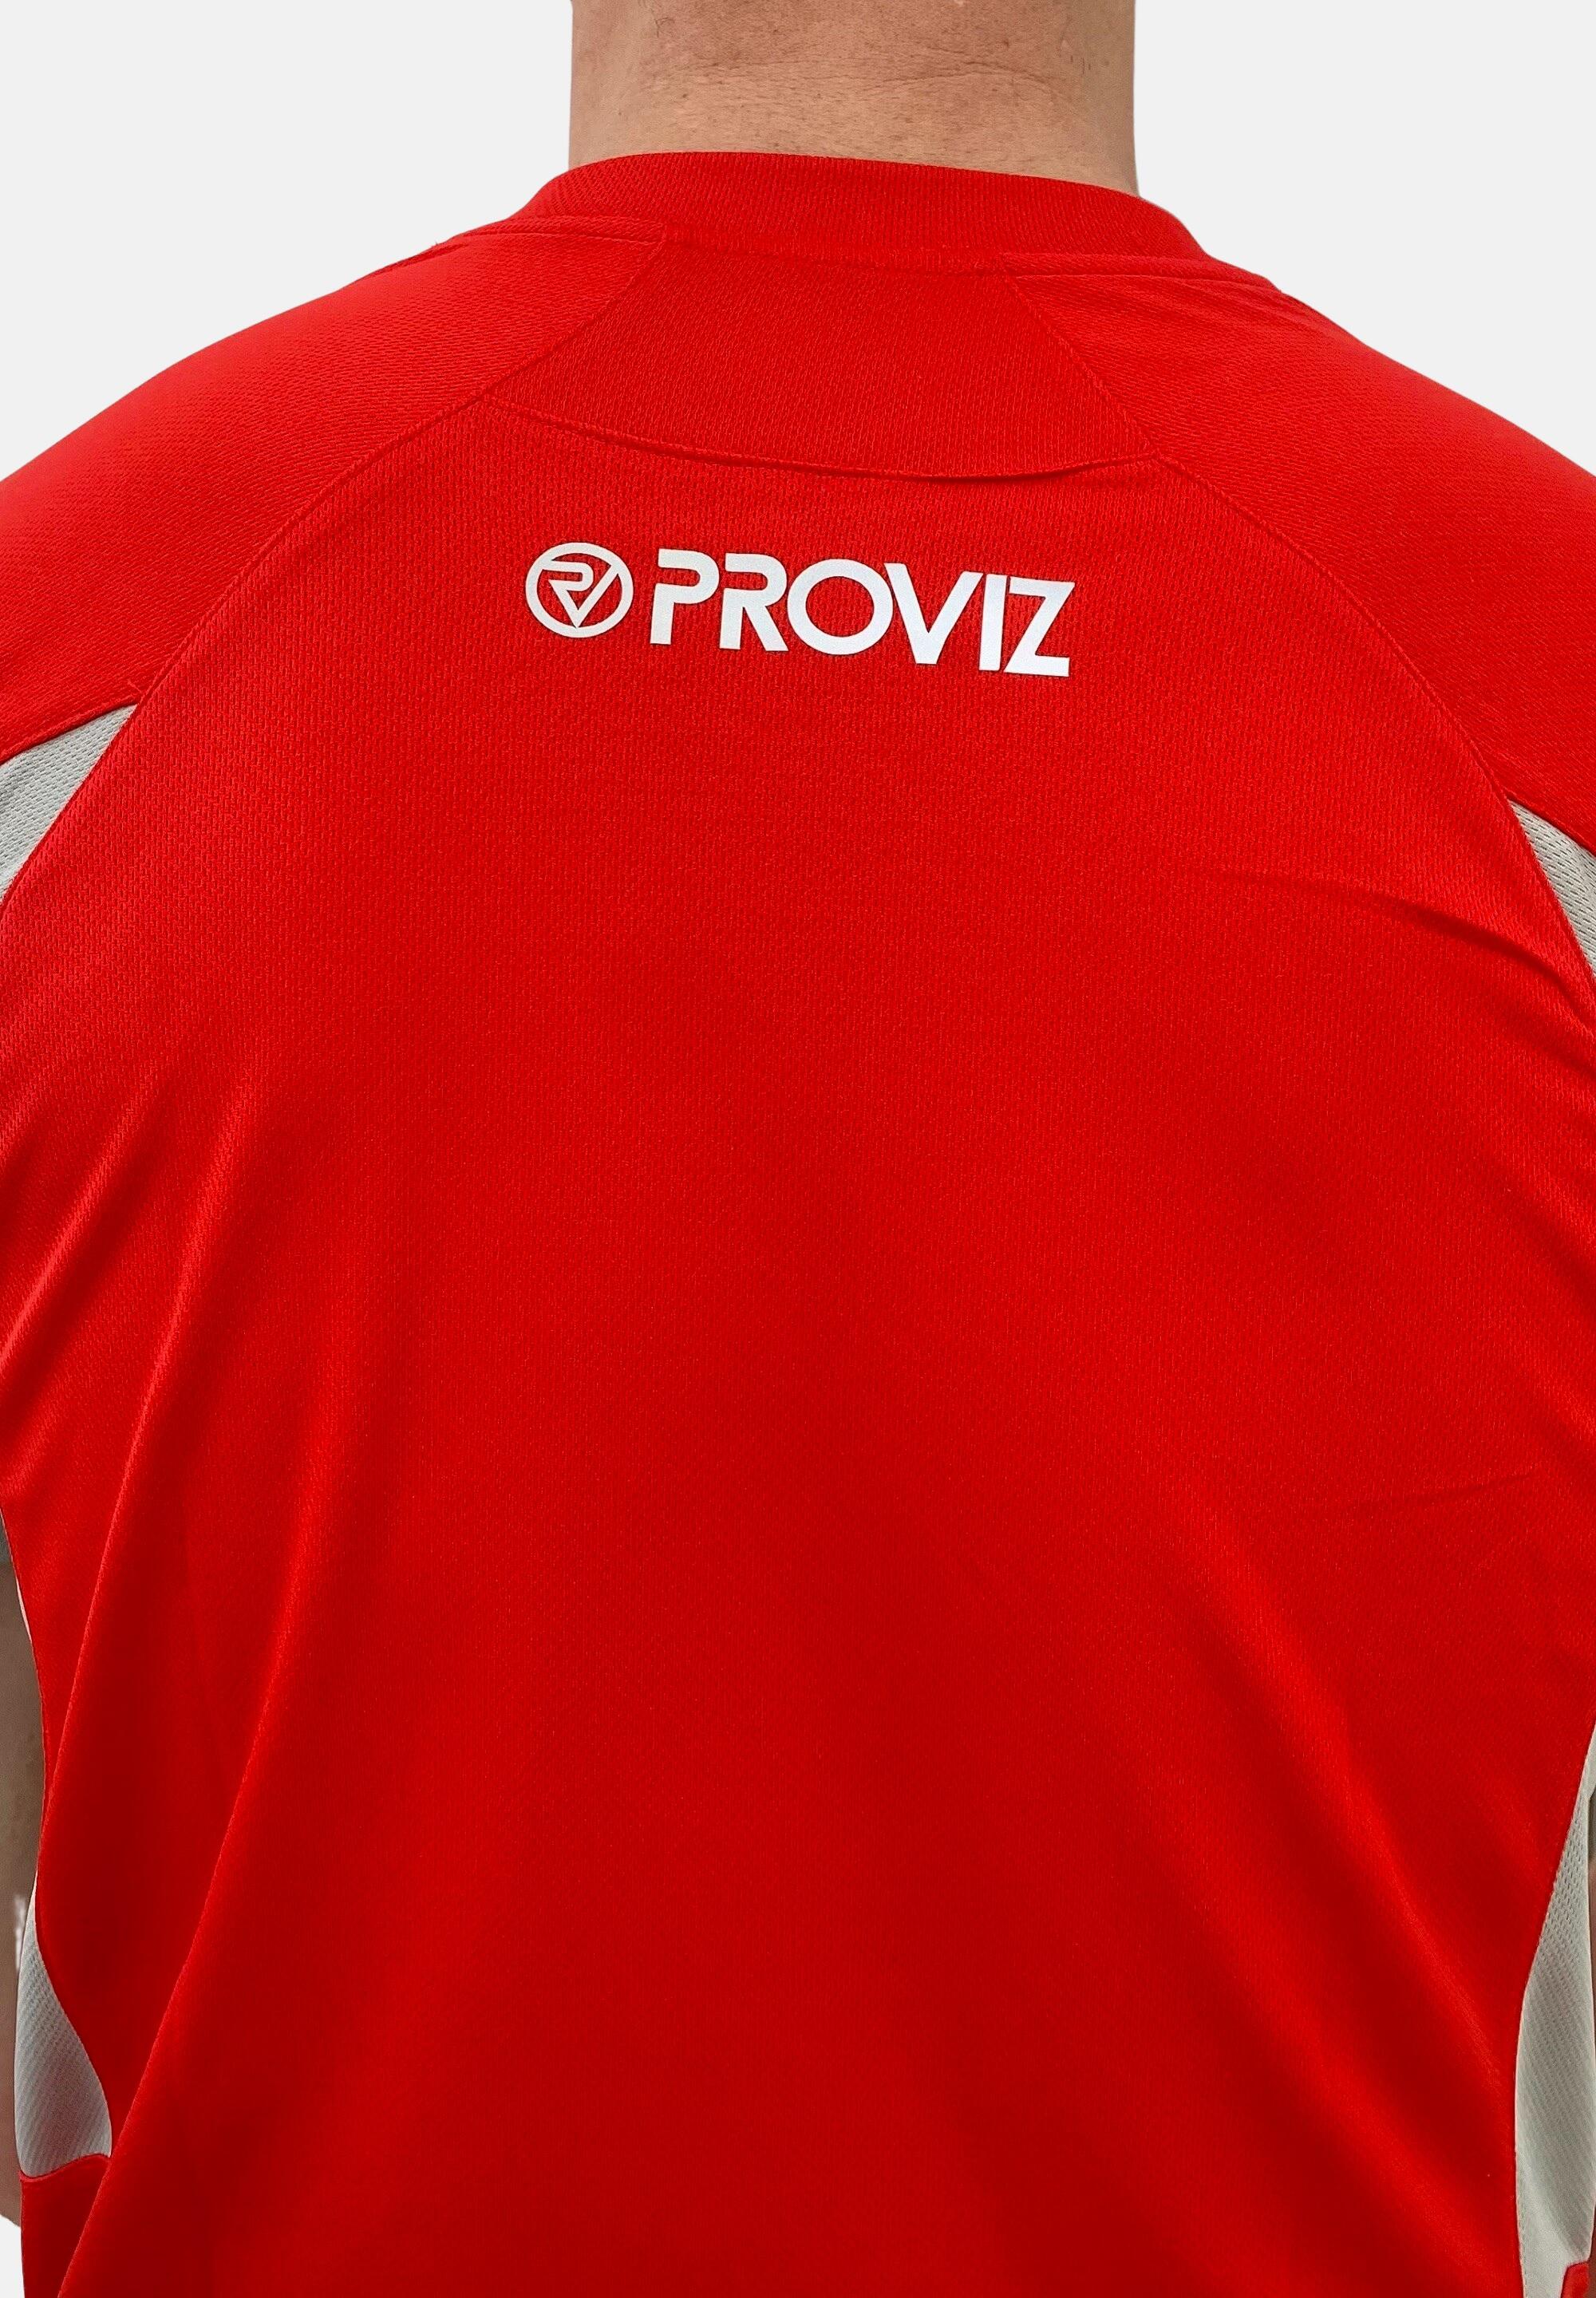 Proviz Classic Mens Sports T-Shirt Short Sleeve Reflective Activewear Top 6/7